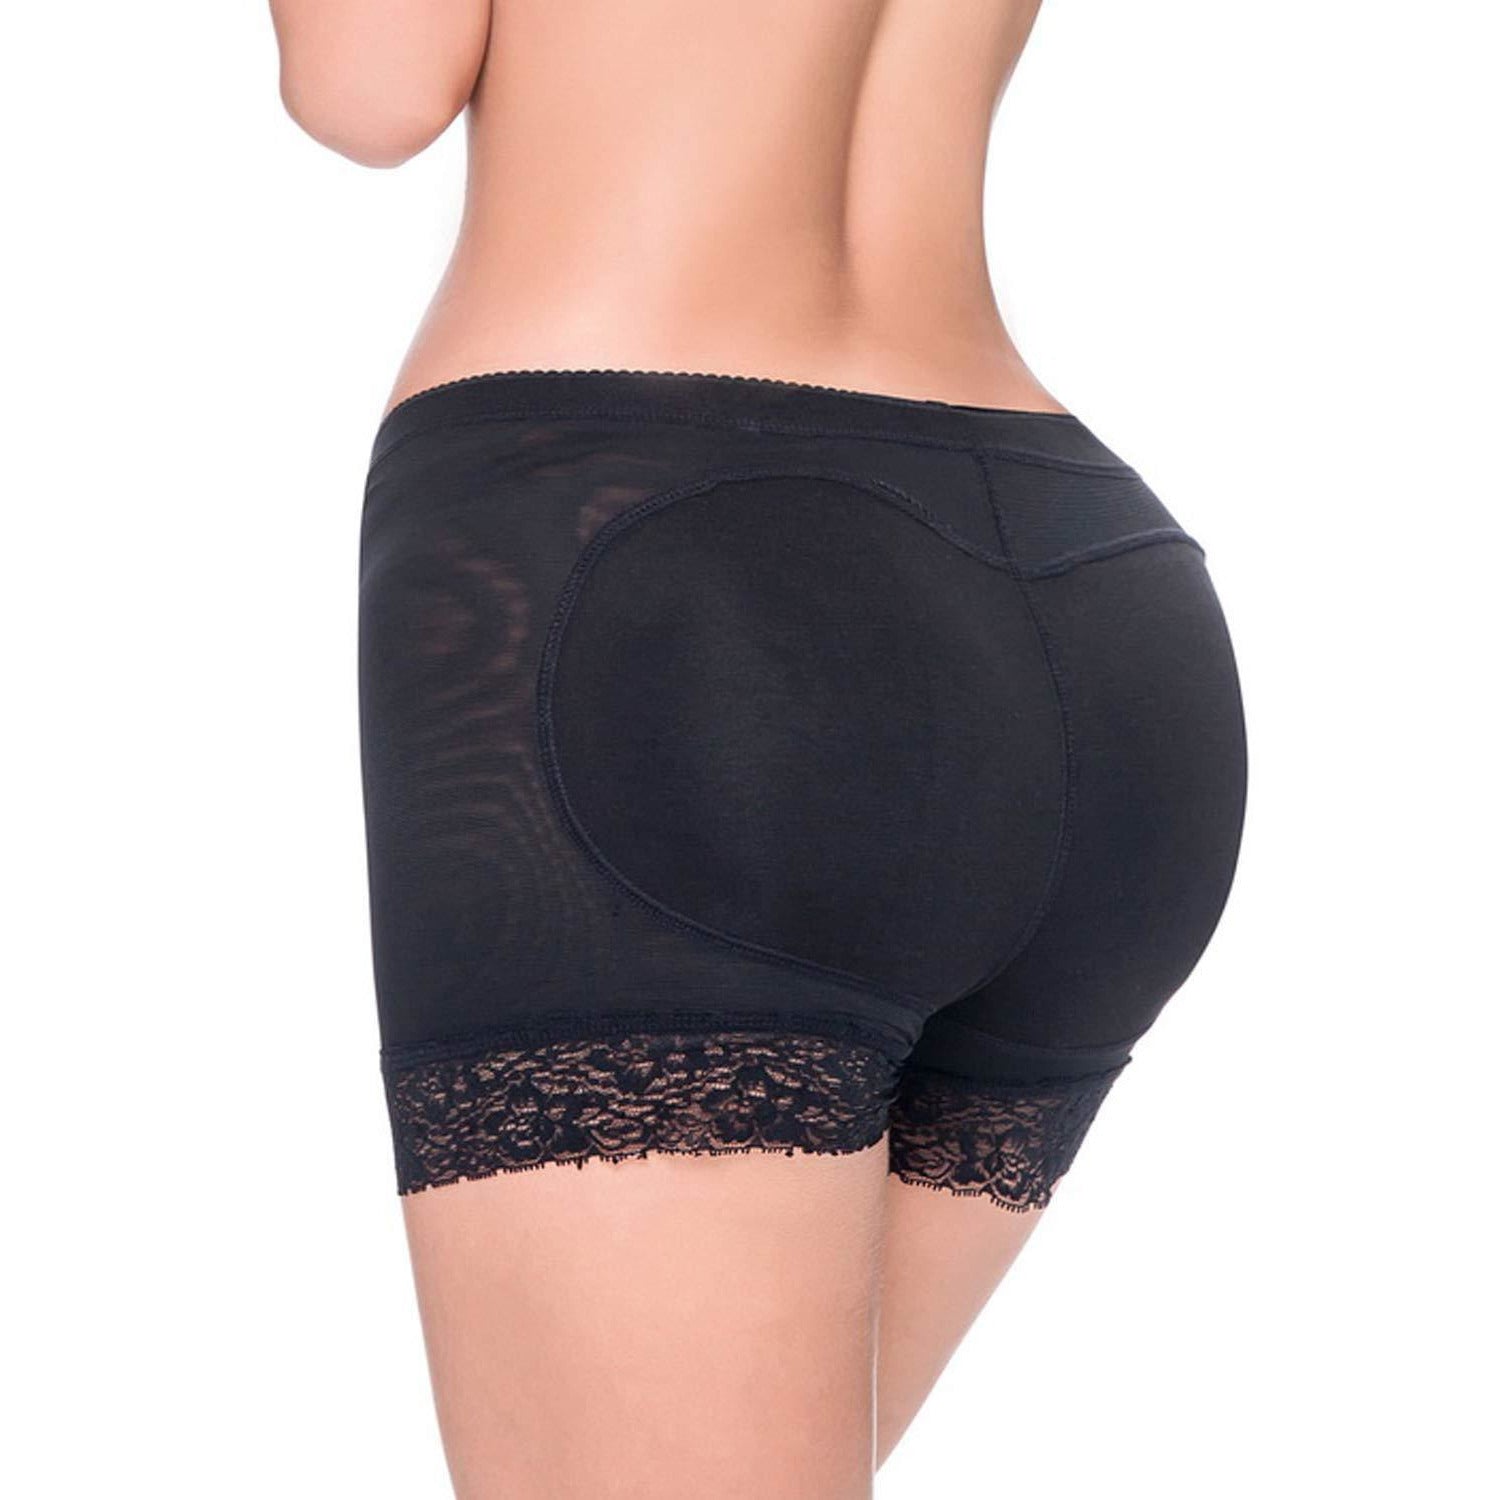 KIWI RATA Womens Seamless Butt Lifter Padded Lace Panties Enhancer  Underwear (M, Black+Nude)